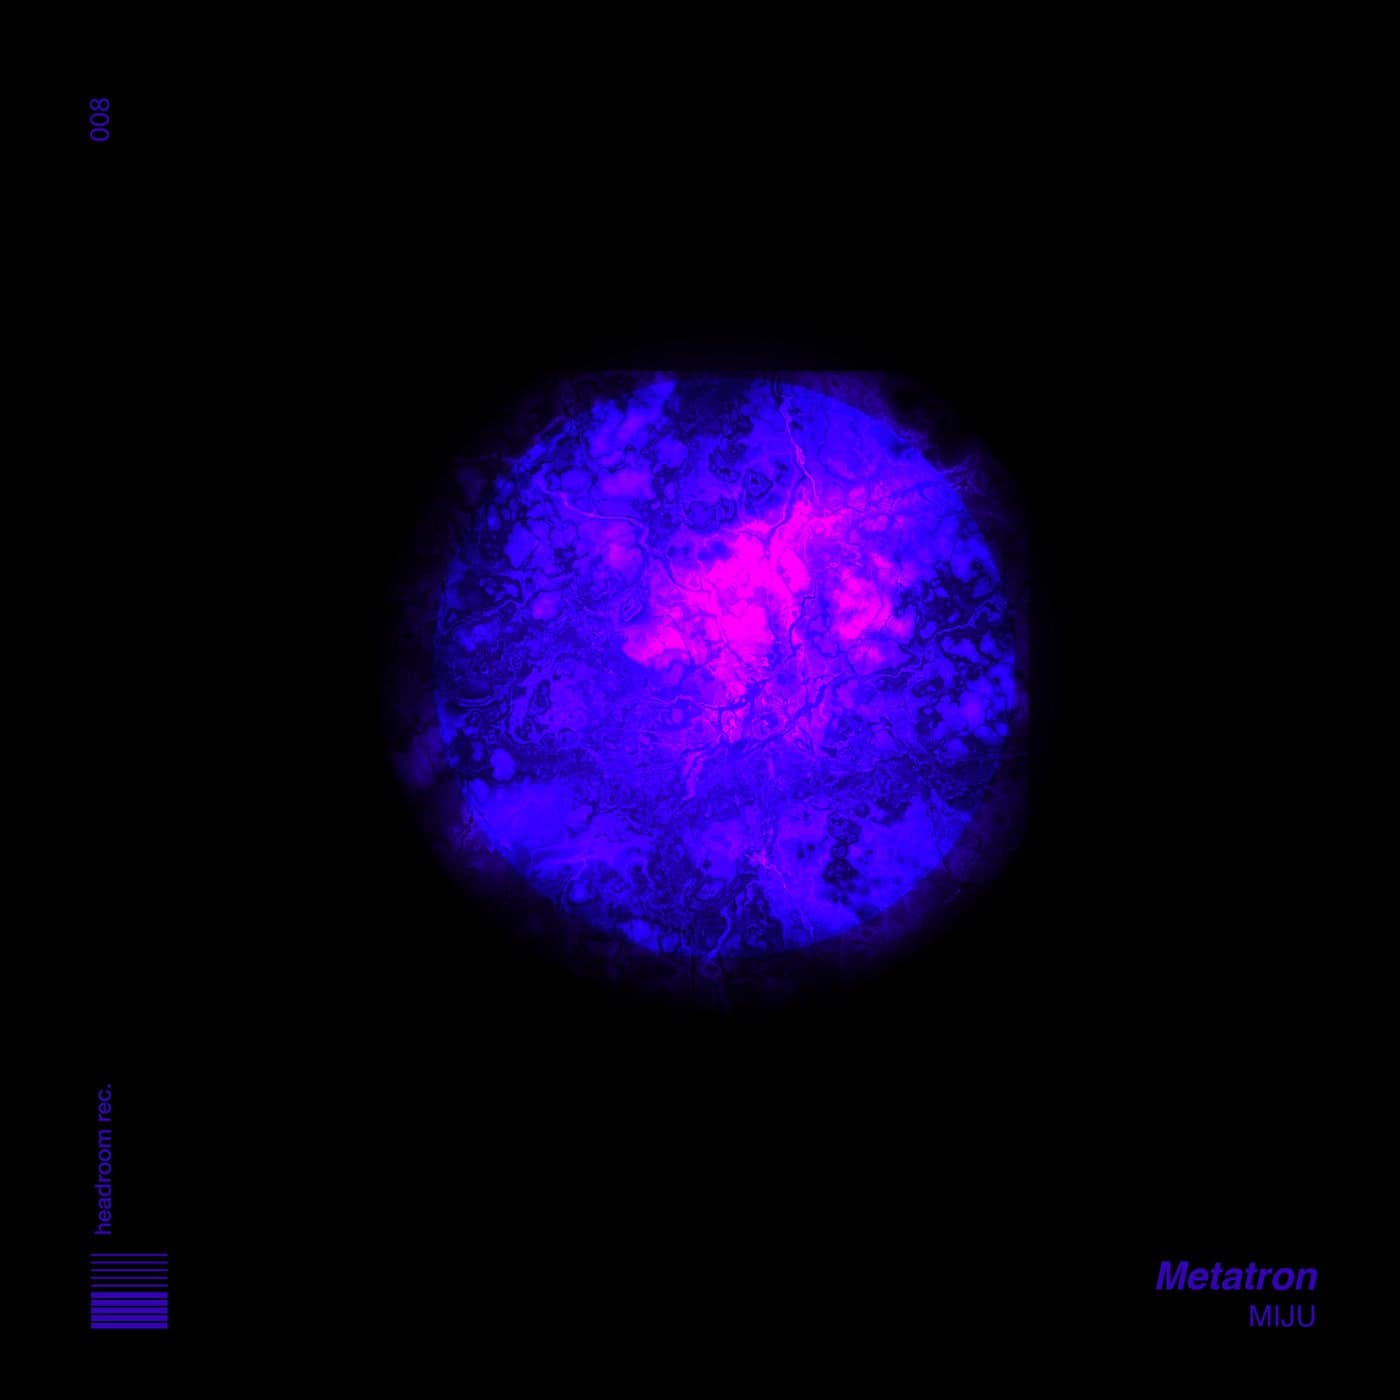 Download MIJU - Metatron on Electrobuzz